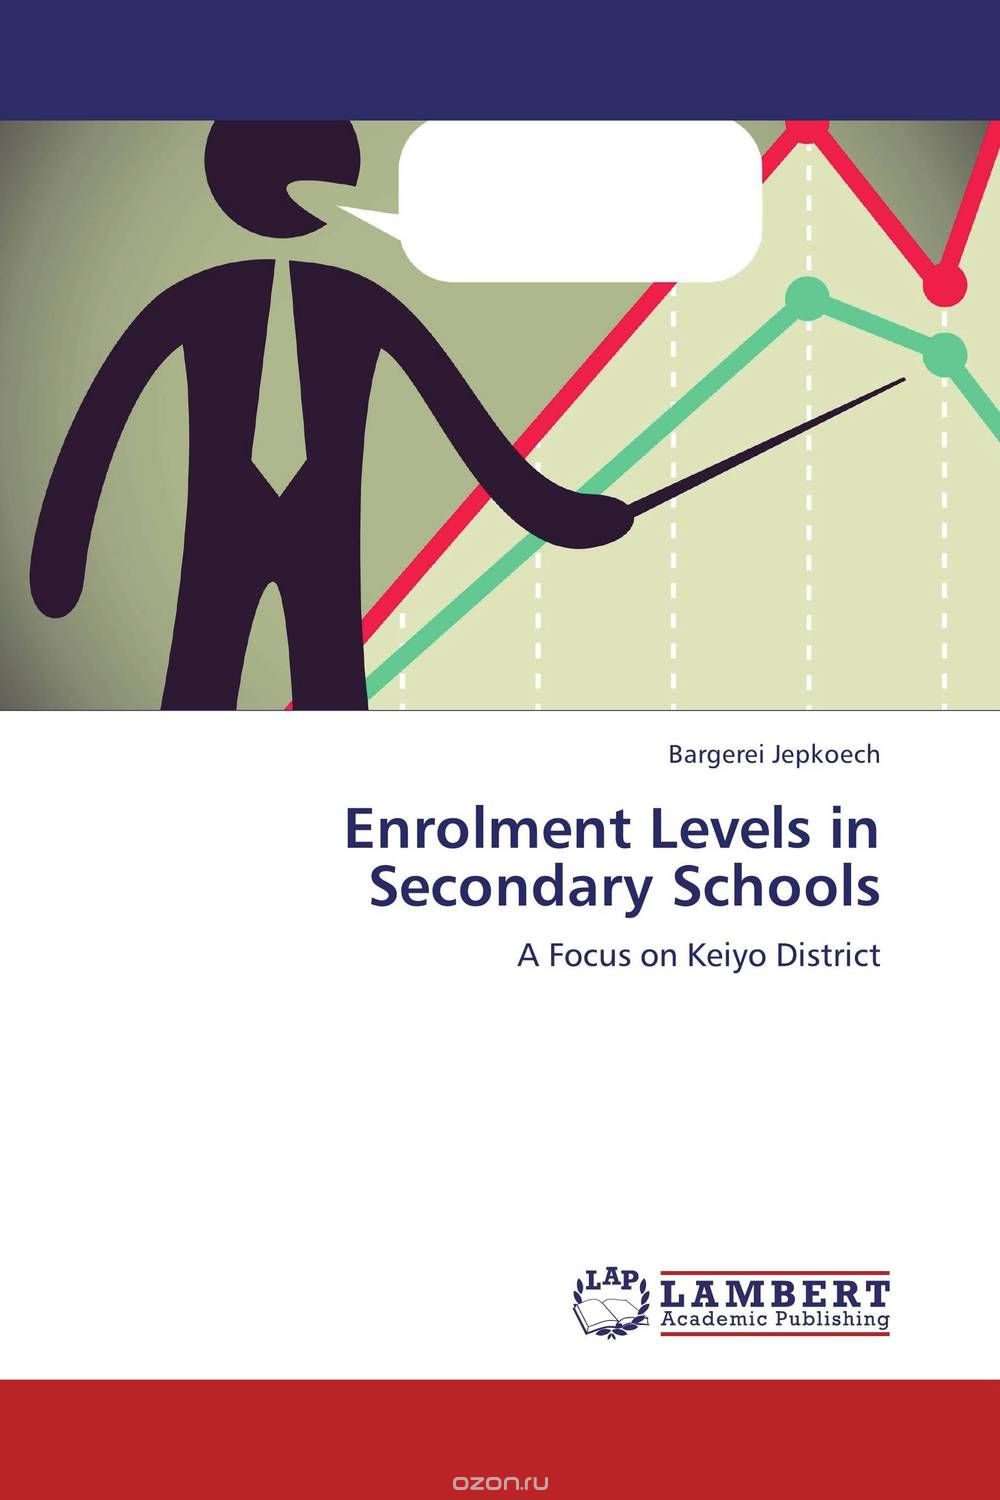 Скачать книгу "Enrolment Levels in Secondary Schools"